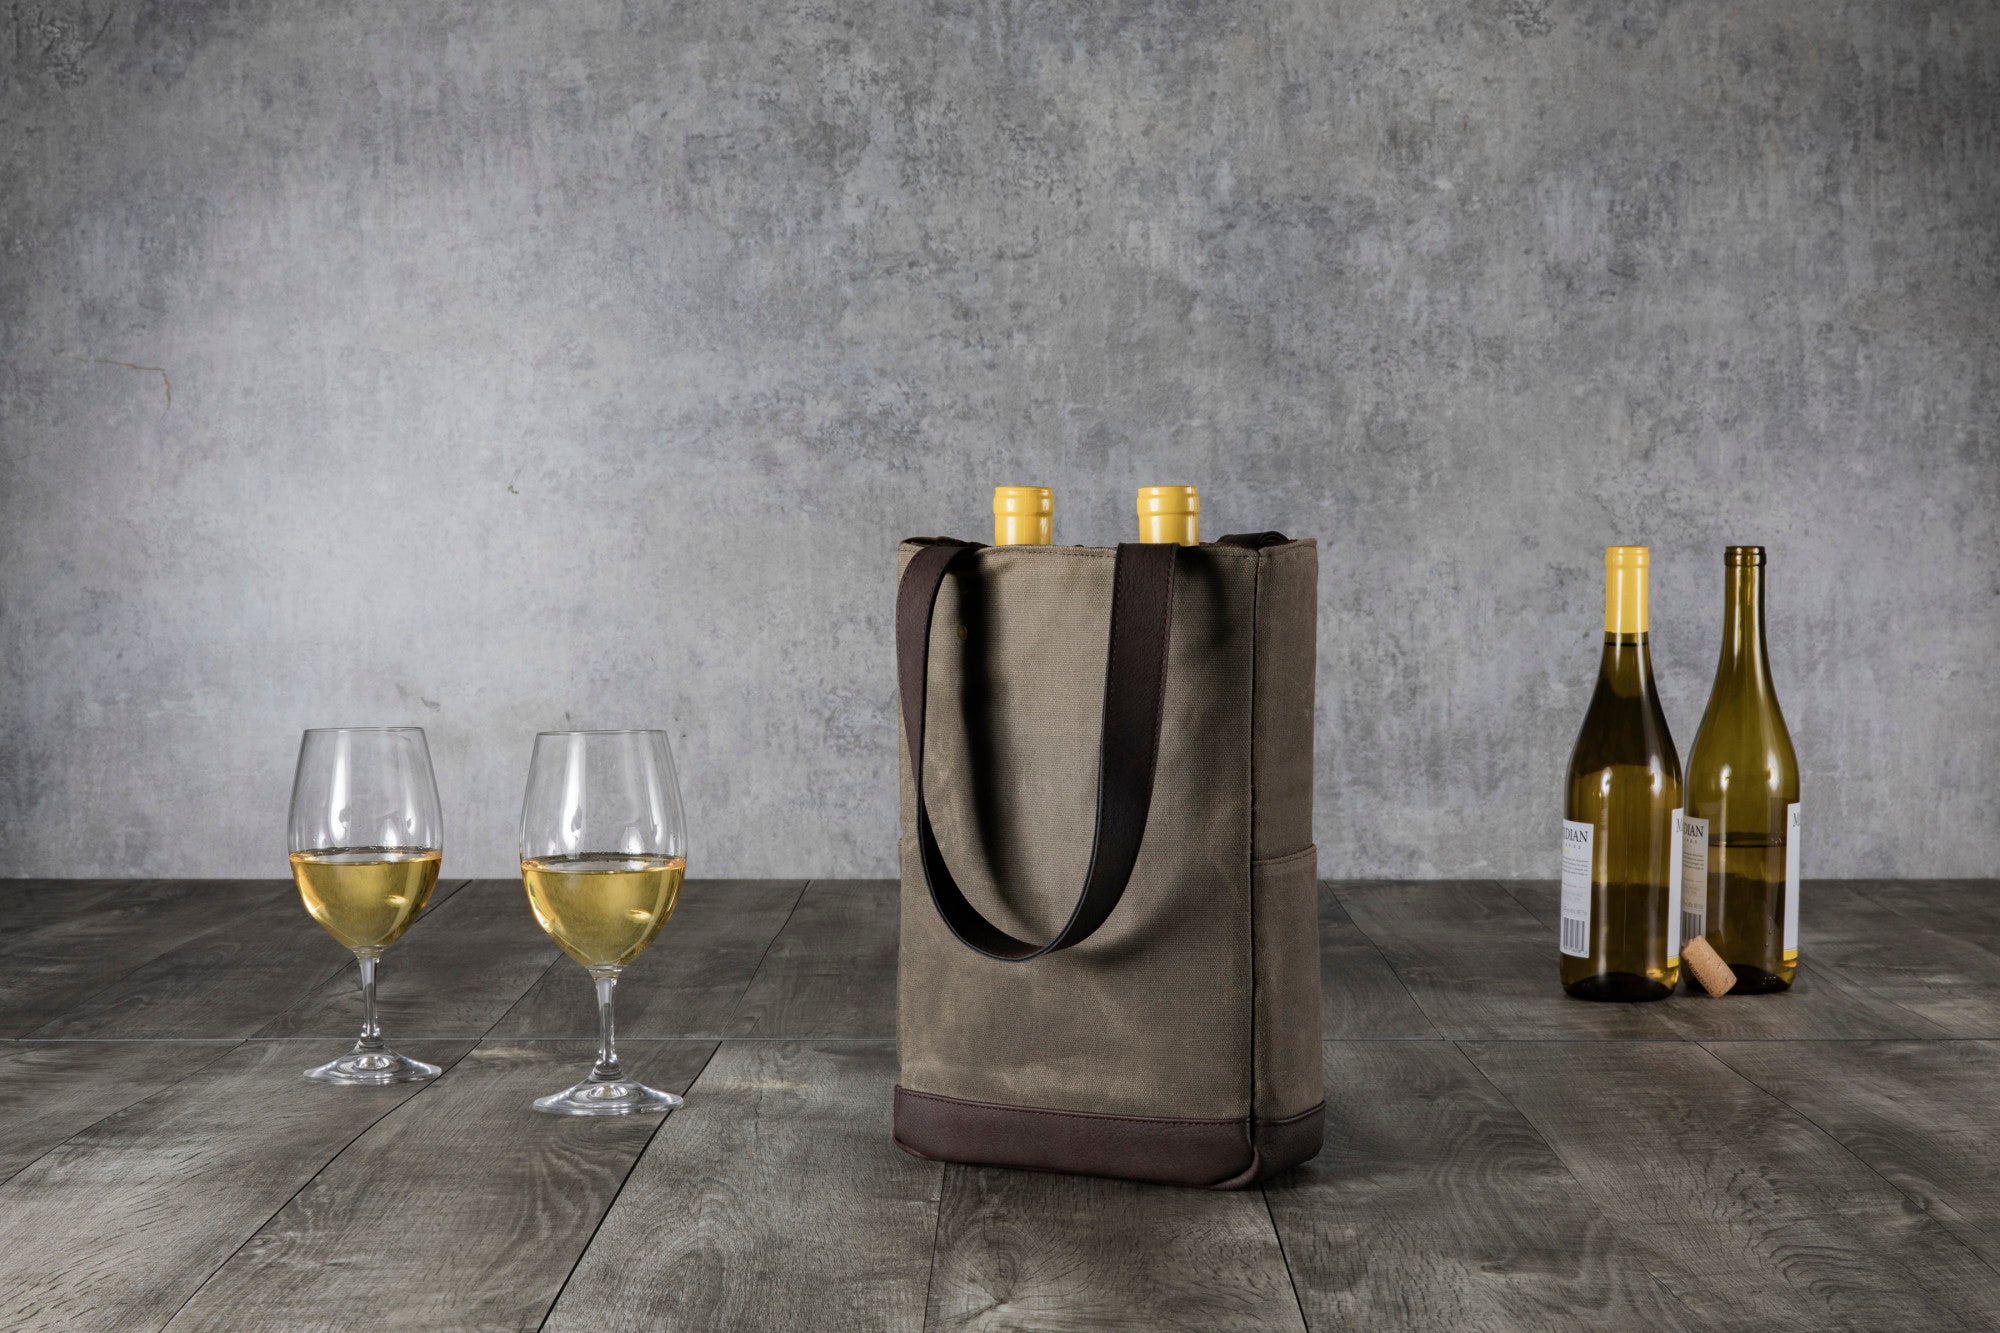 Texas Rangers - 2 Bottle Insulated Wine Cooler Bag